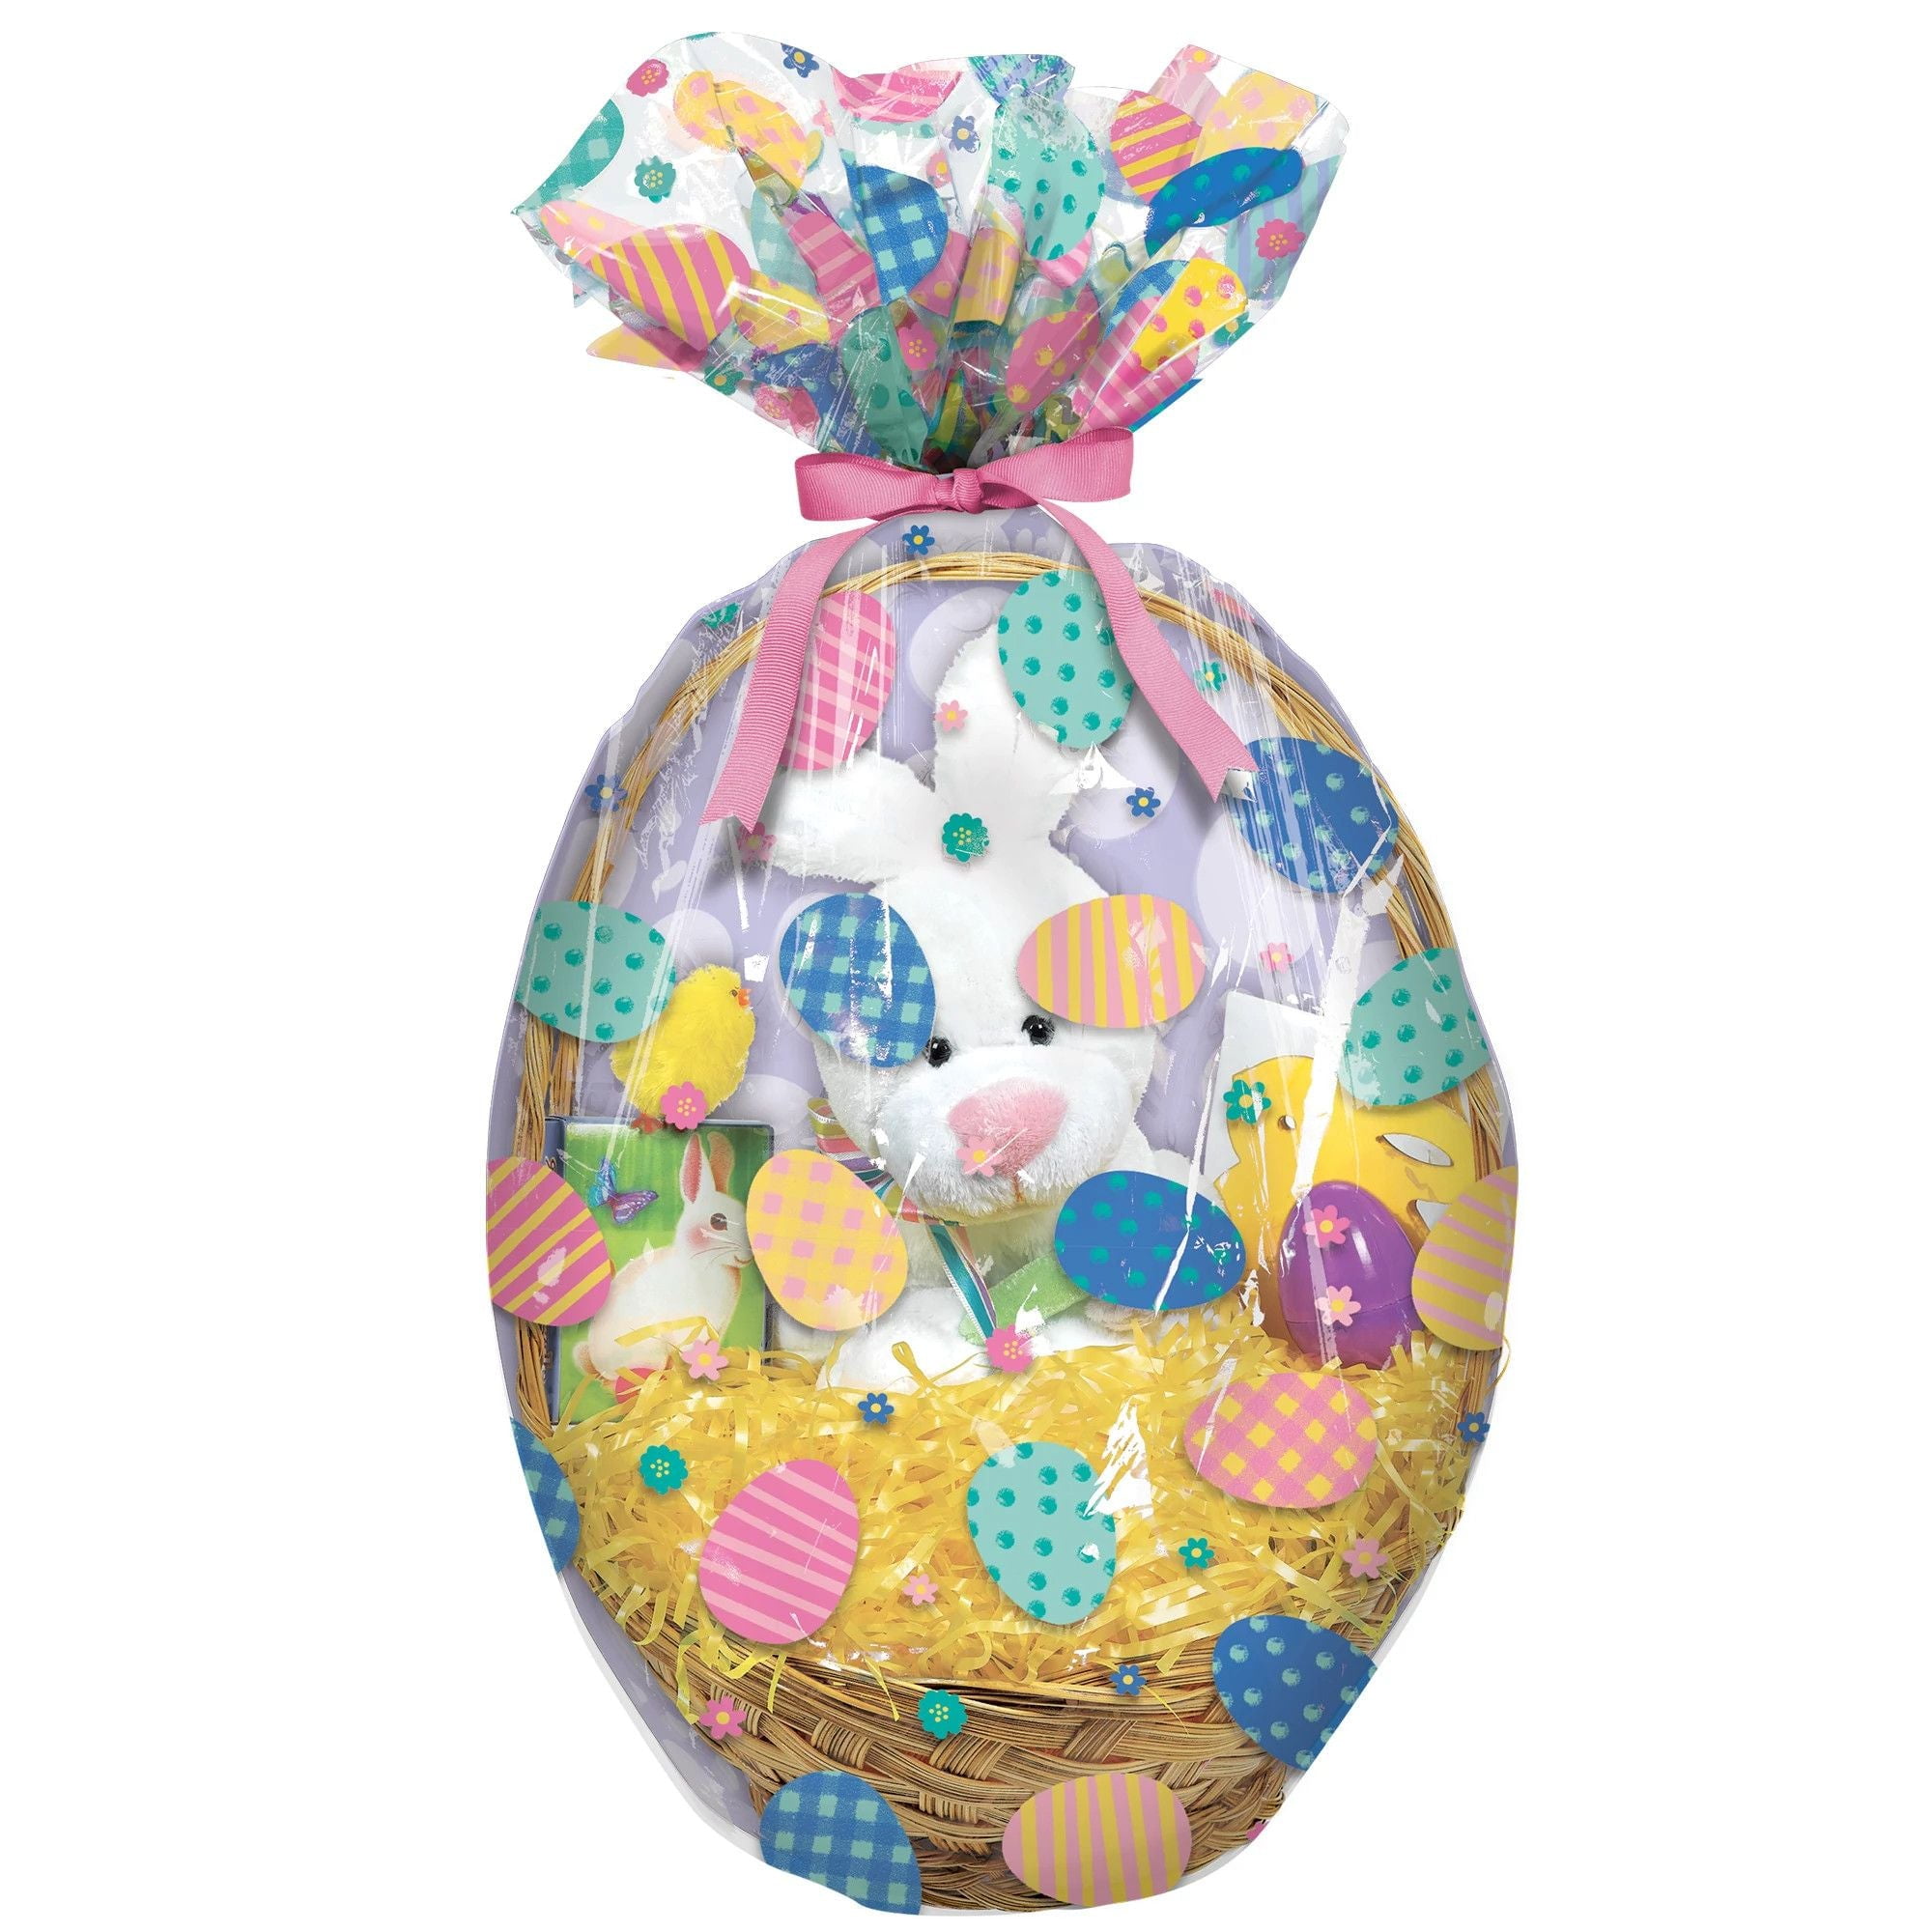 JOYIN 3 Pcs Easter Gift Bags Easter Egg Hunt Gift Filler 10”x 8” Reusable Canvas Bunny Easter Gift Treat Candy Bags Bulk Easter Basket with Handles for Kids Easter Party Favors 